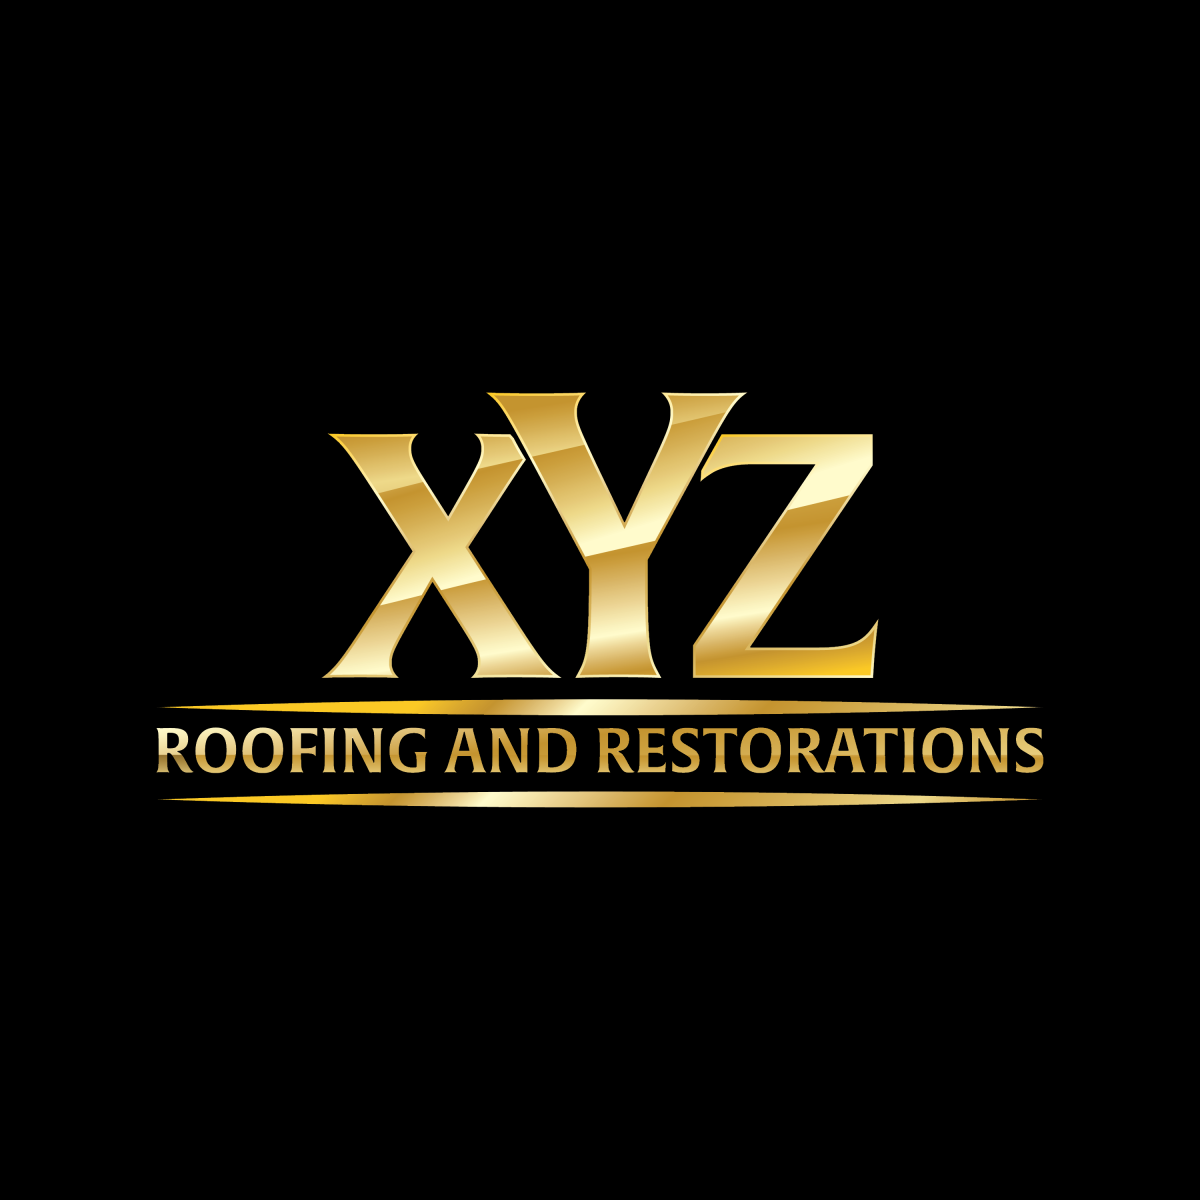 XYZ Roofing and Restorations - Harlingen, TX